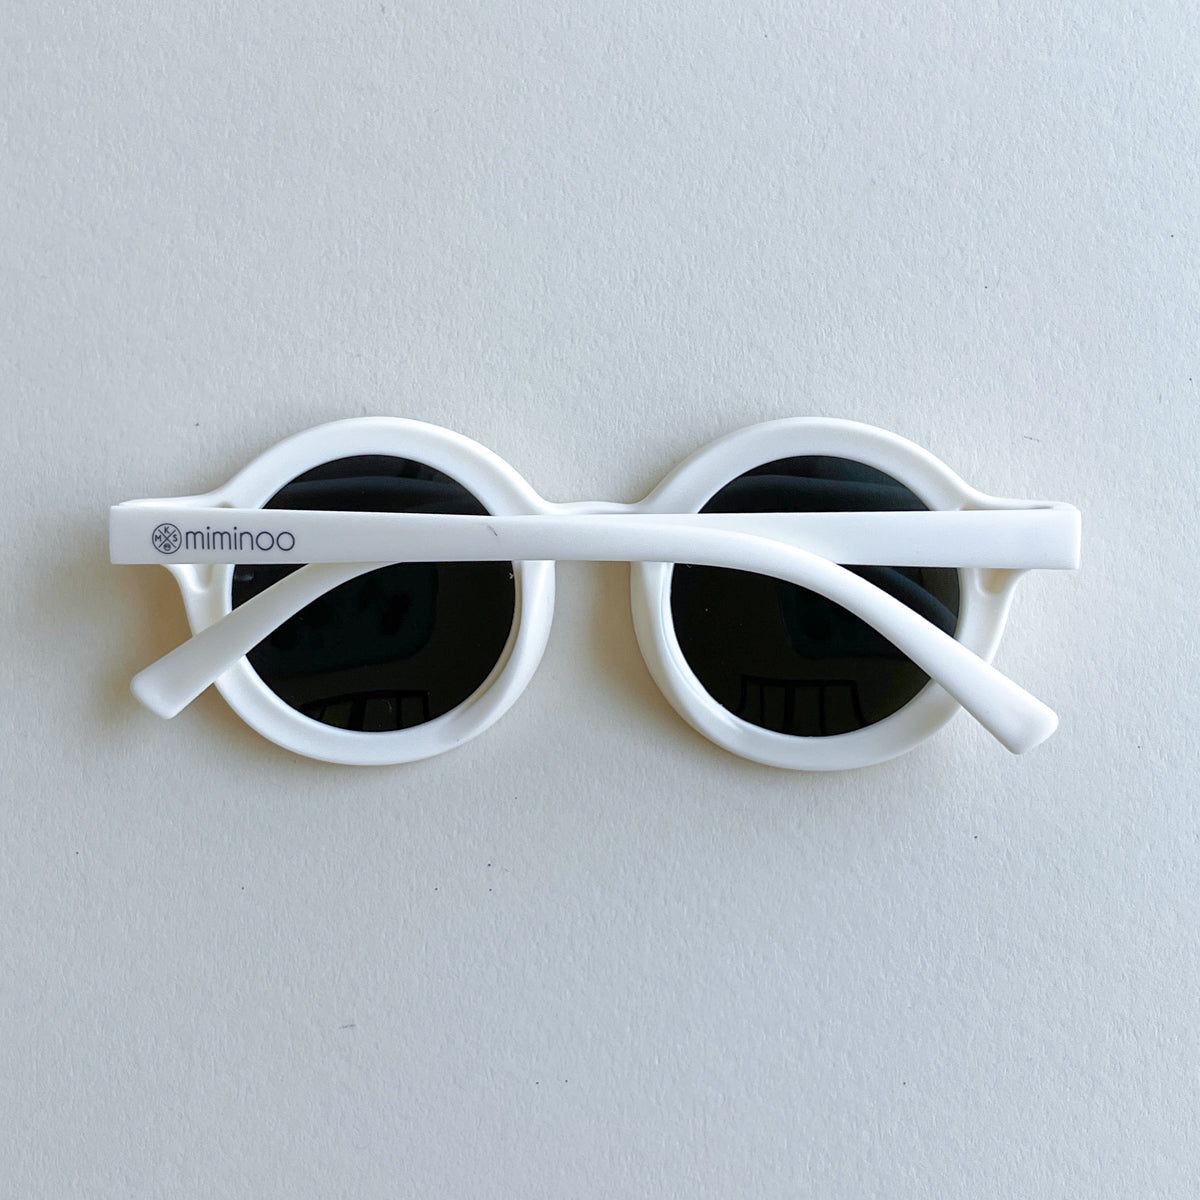 New Flexible, Resistant & Polarized UV 400 Kids Sunglasses Beige